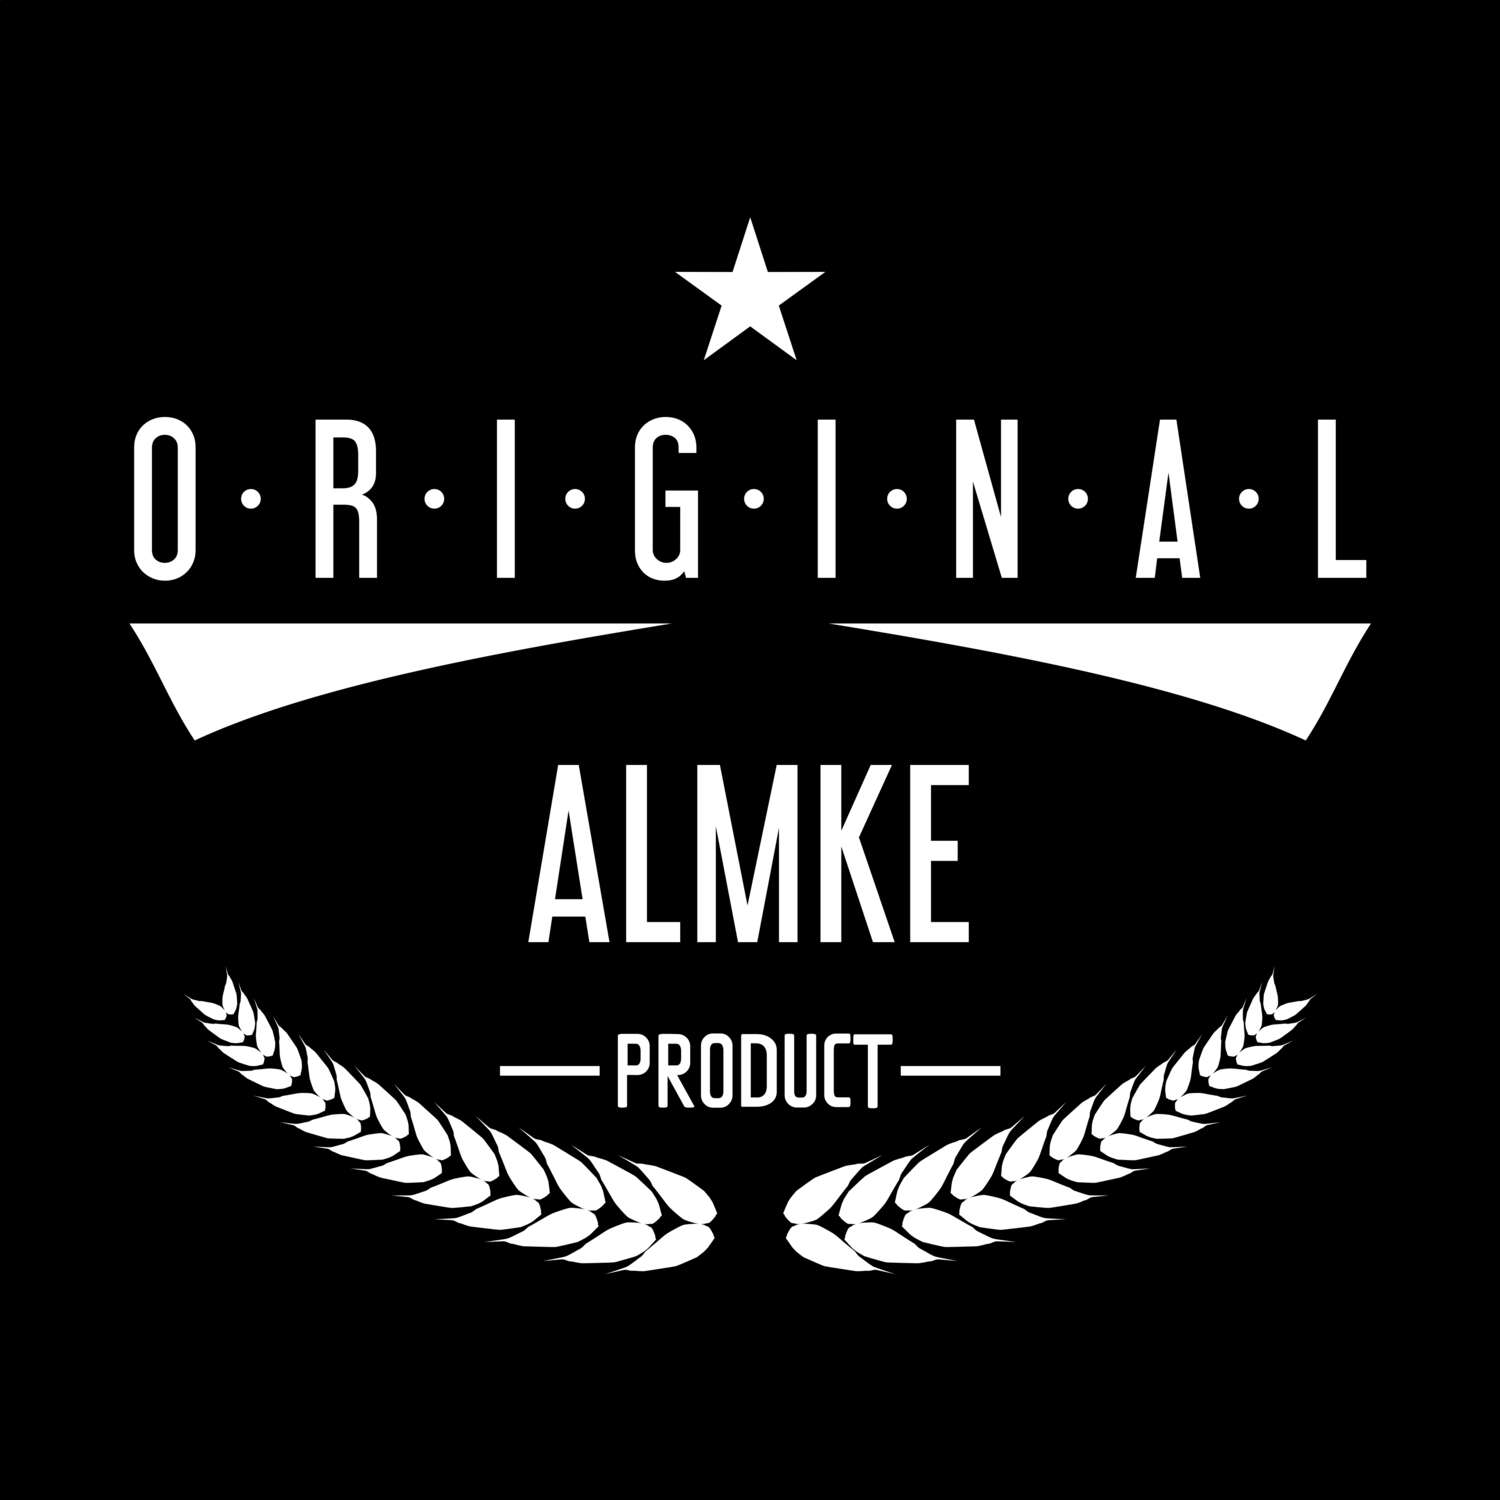 Almke T-Shirt »Original Product«